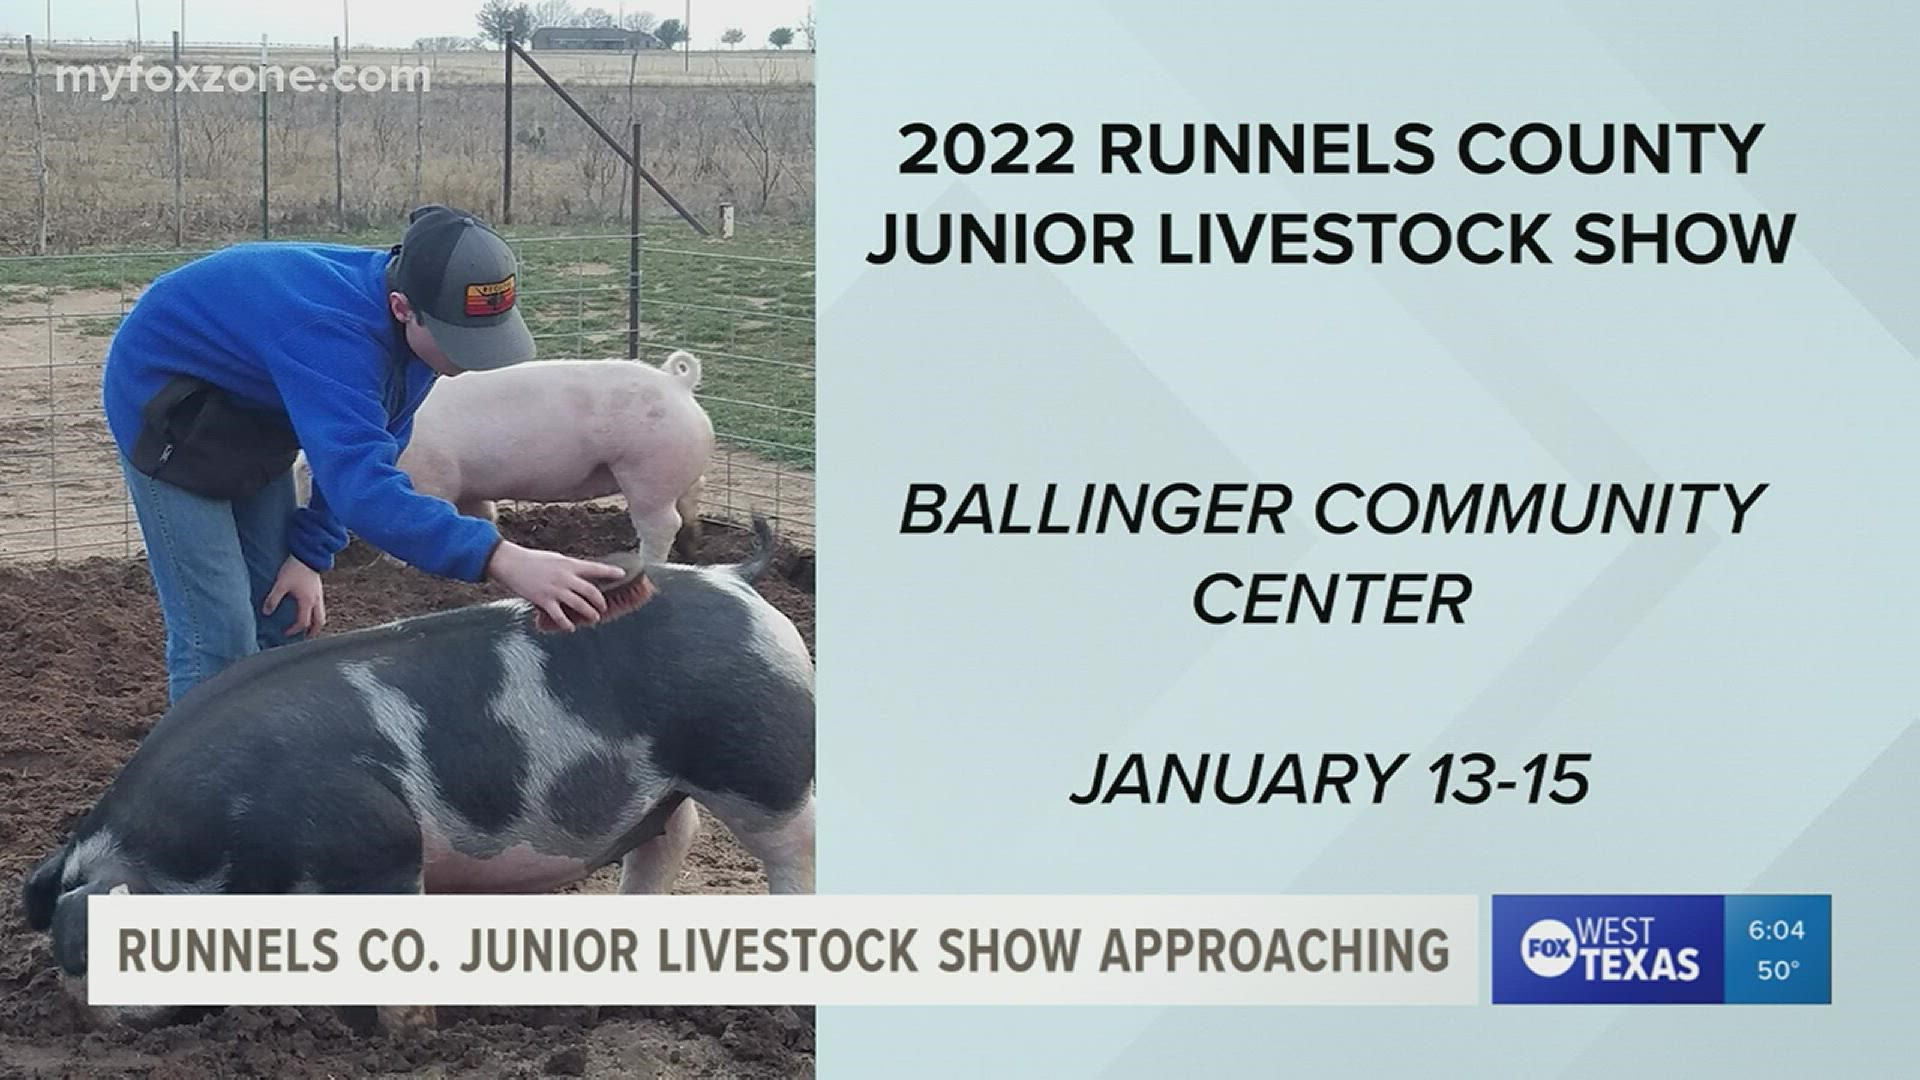 The Runnels County Junior Livestock Show is happening in Ballinger.